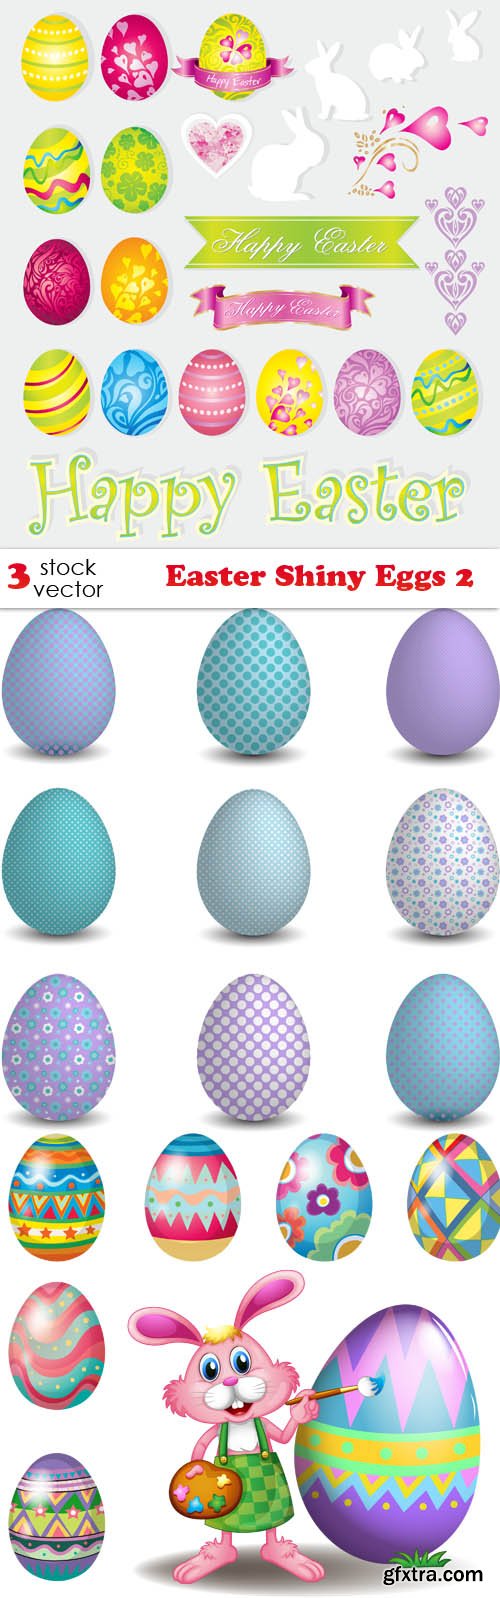 Vectors - Easter Shiny Eggs 2